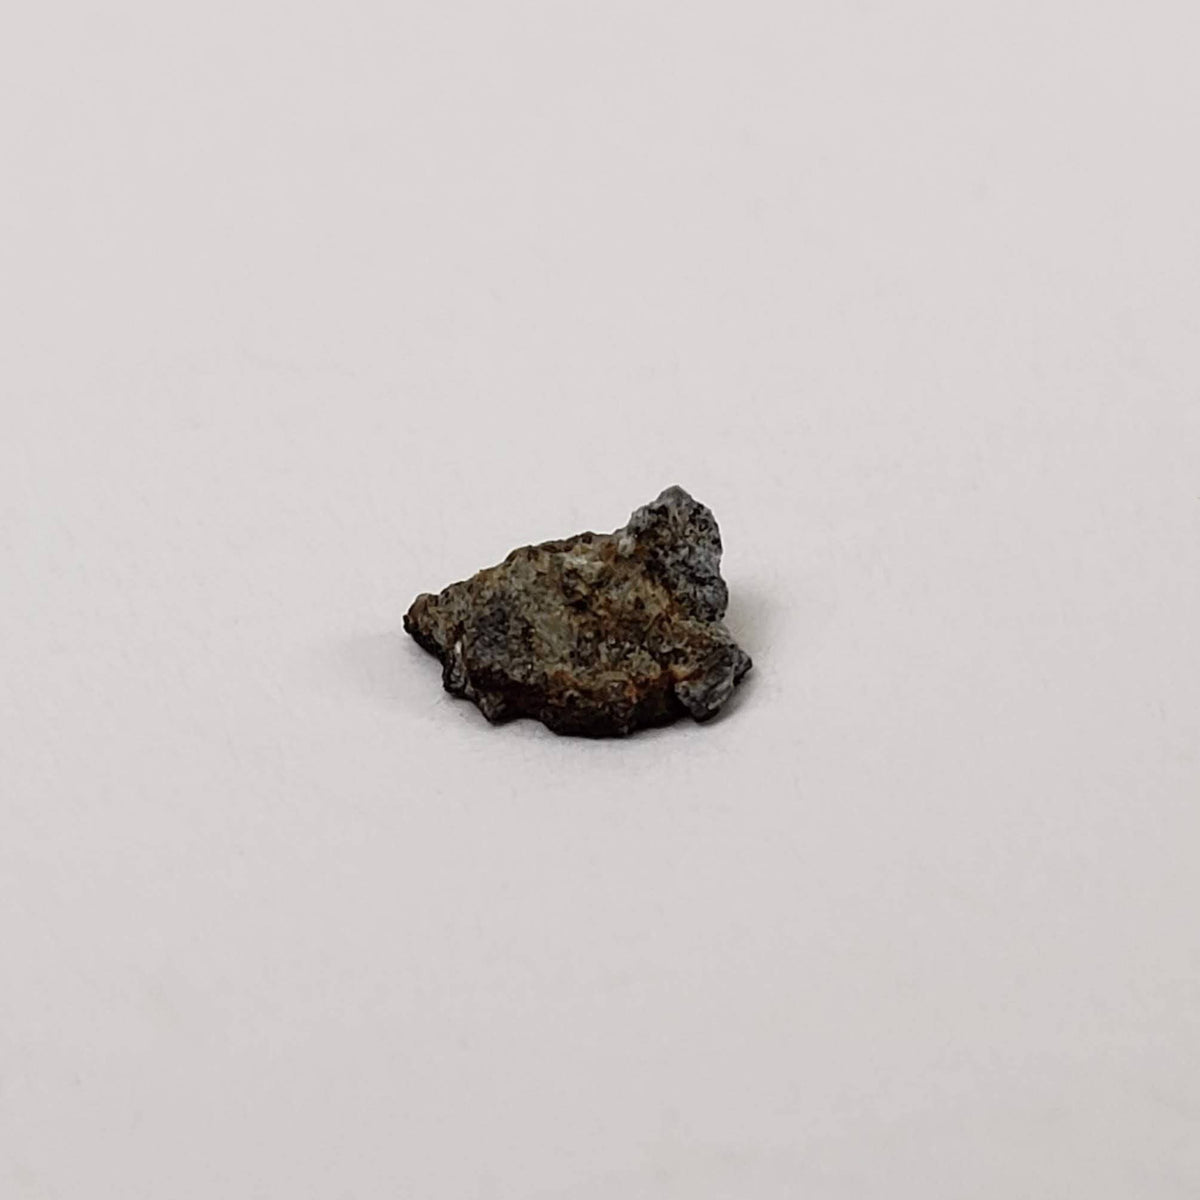 Shelburne Meteorite | 66 mg | Fragment | L5 Class | Observed Fall 1904 Canada